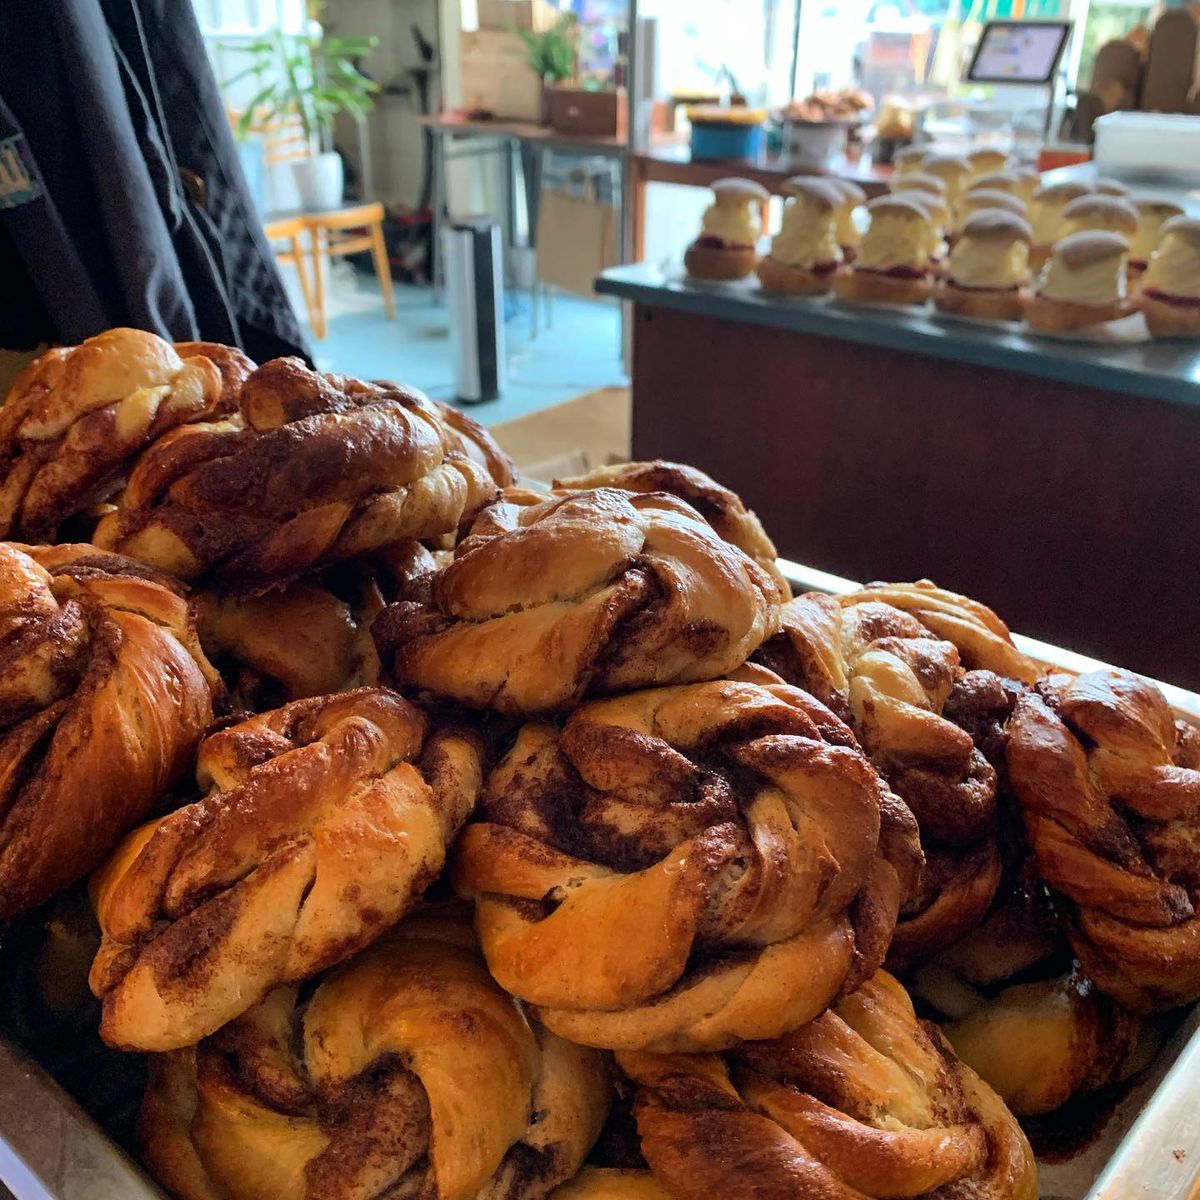 Kanelbullar (cinnamon buns) piled high at Tromsø in Forest Gate